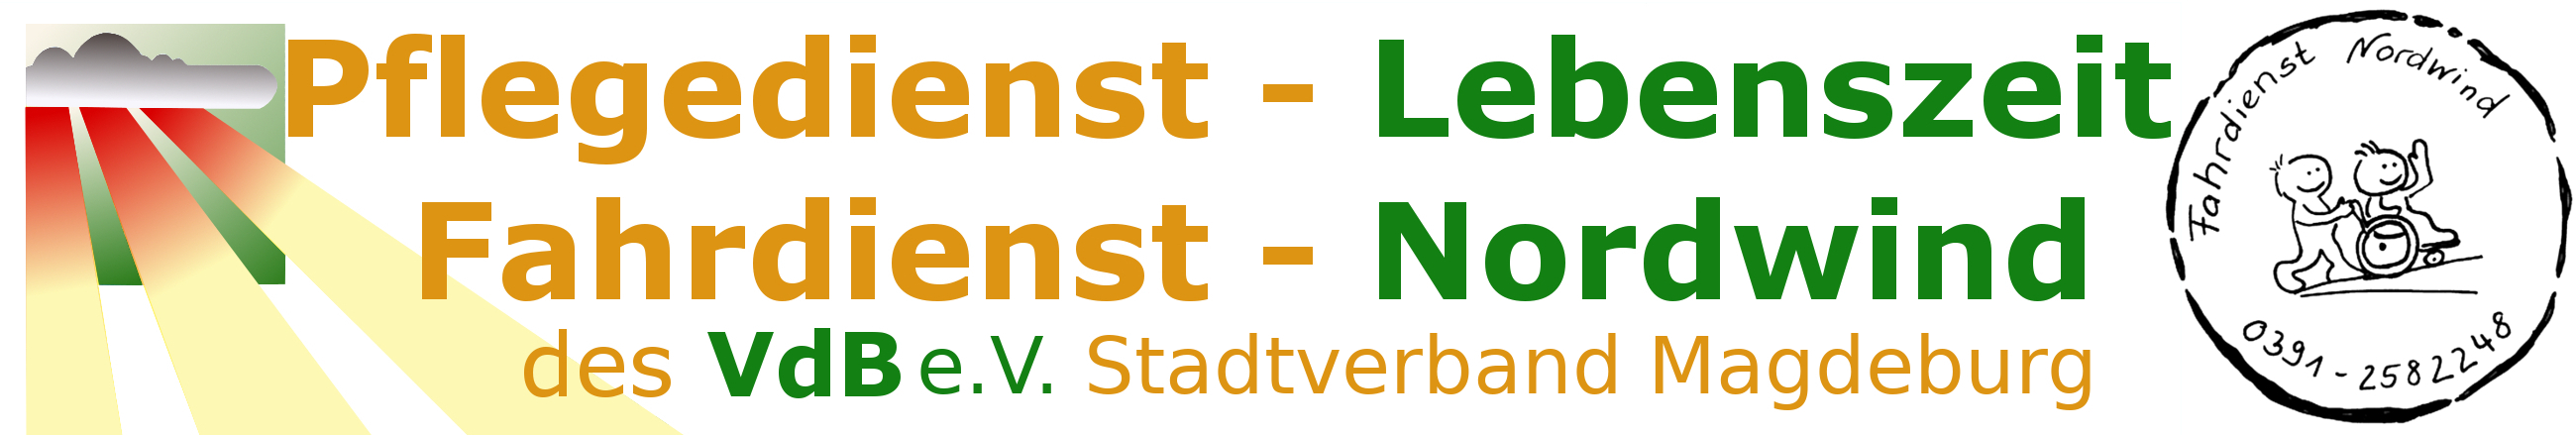 Logo: Pflegedienst Lebenszeit des VdB e.V. Stadtverband Magdeburg